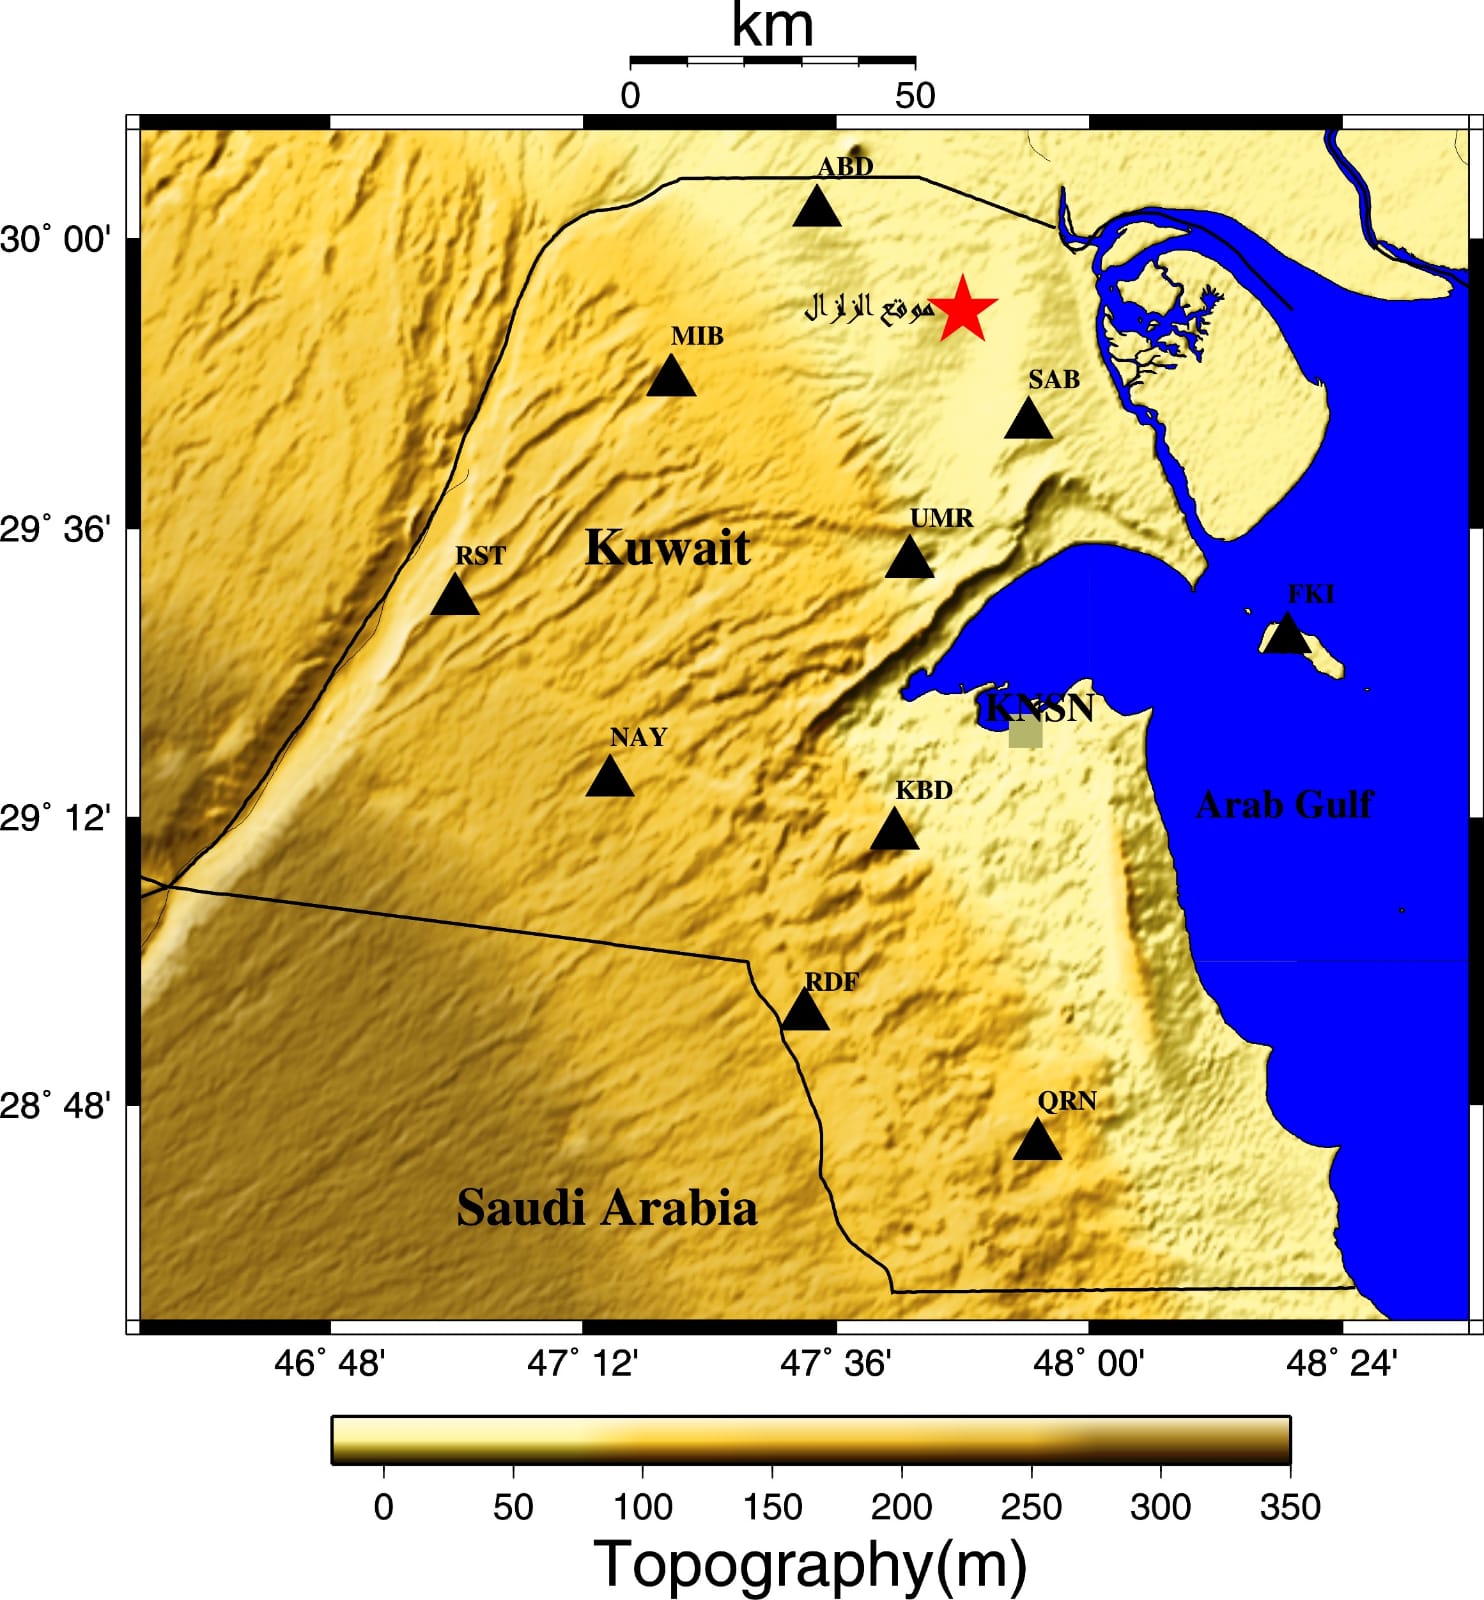 The epicenter of the quake was three kilometers underground